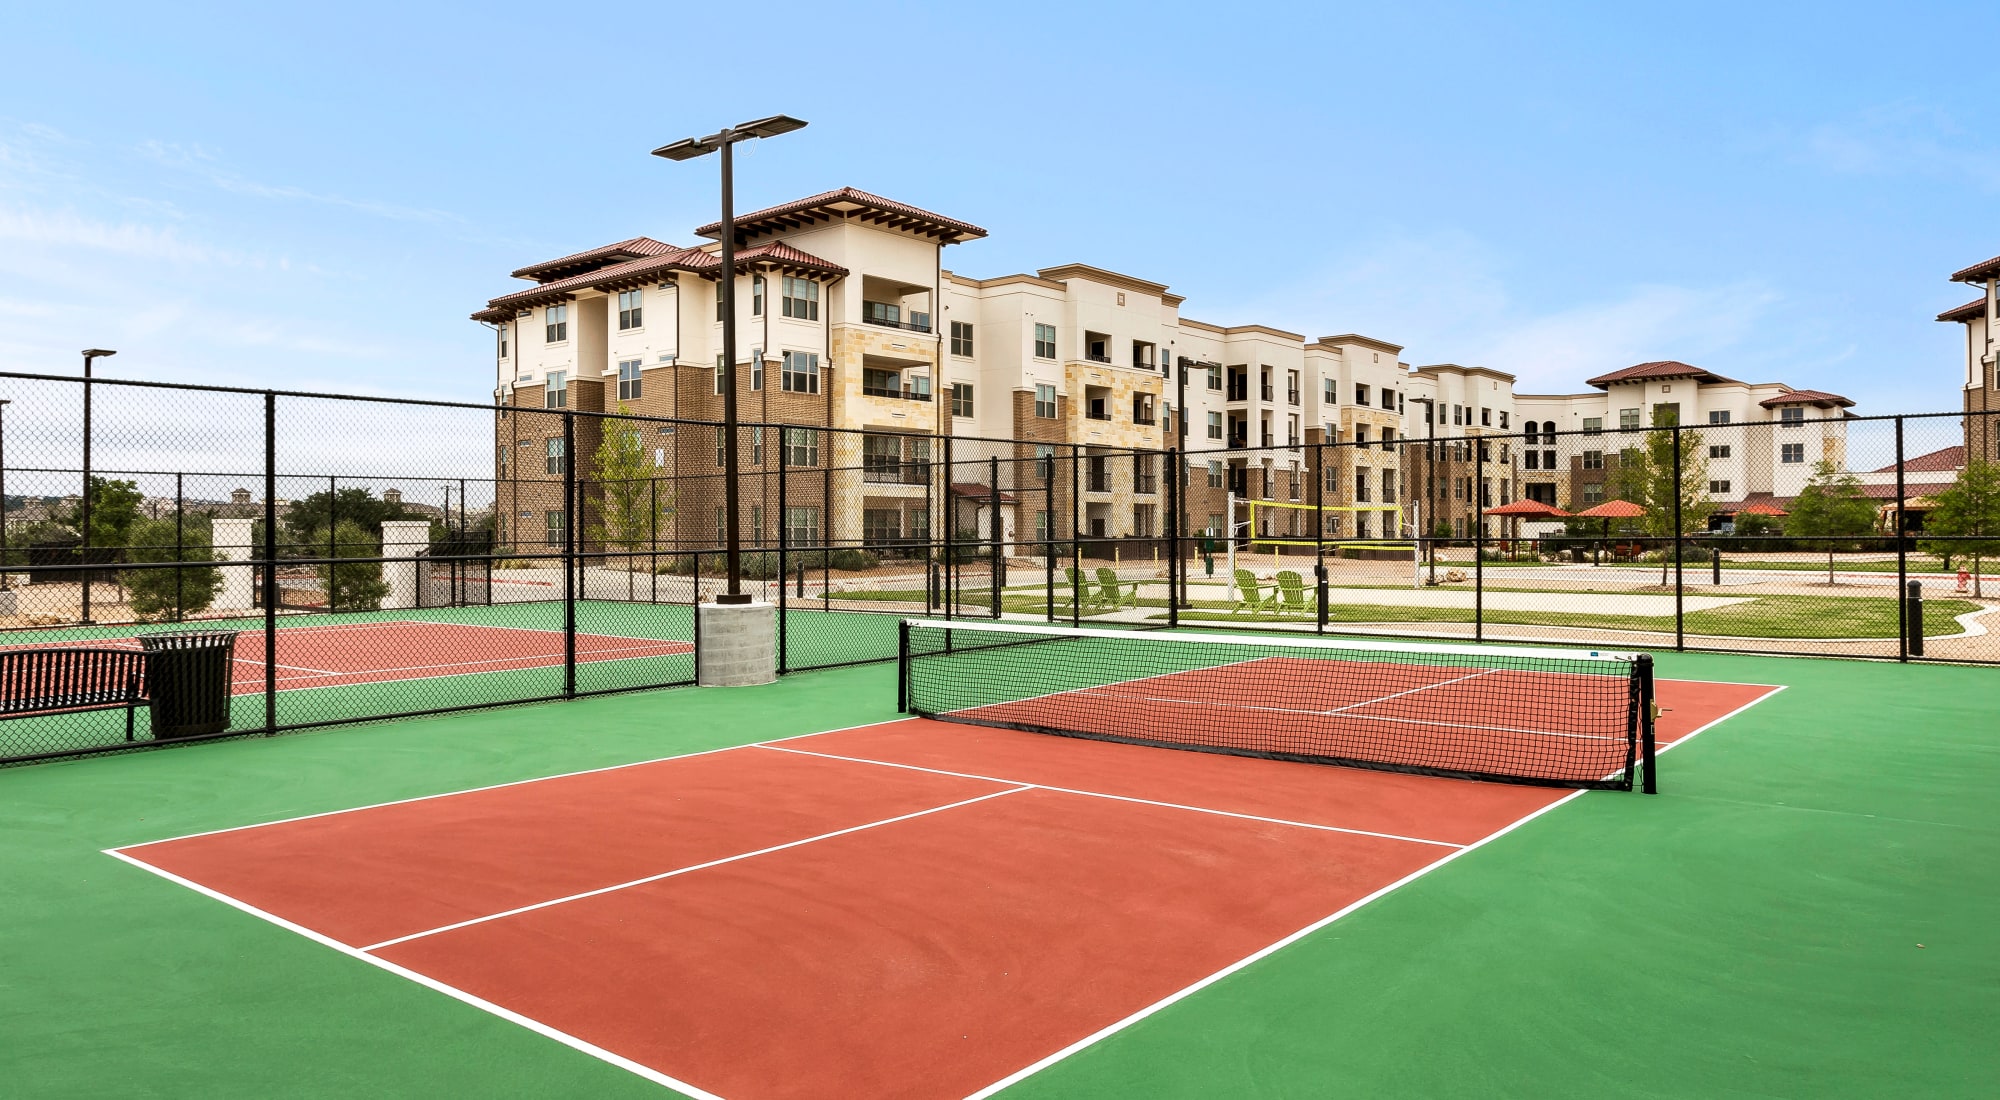 Tennis courts at Villas at the Rim in San Antonio, Texas